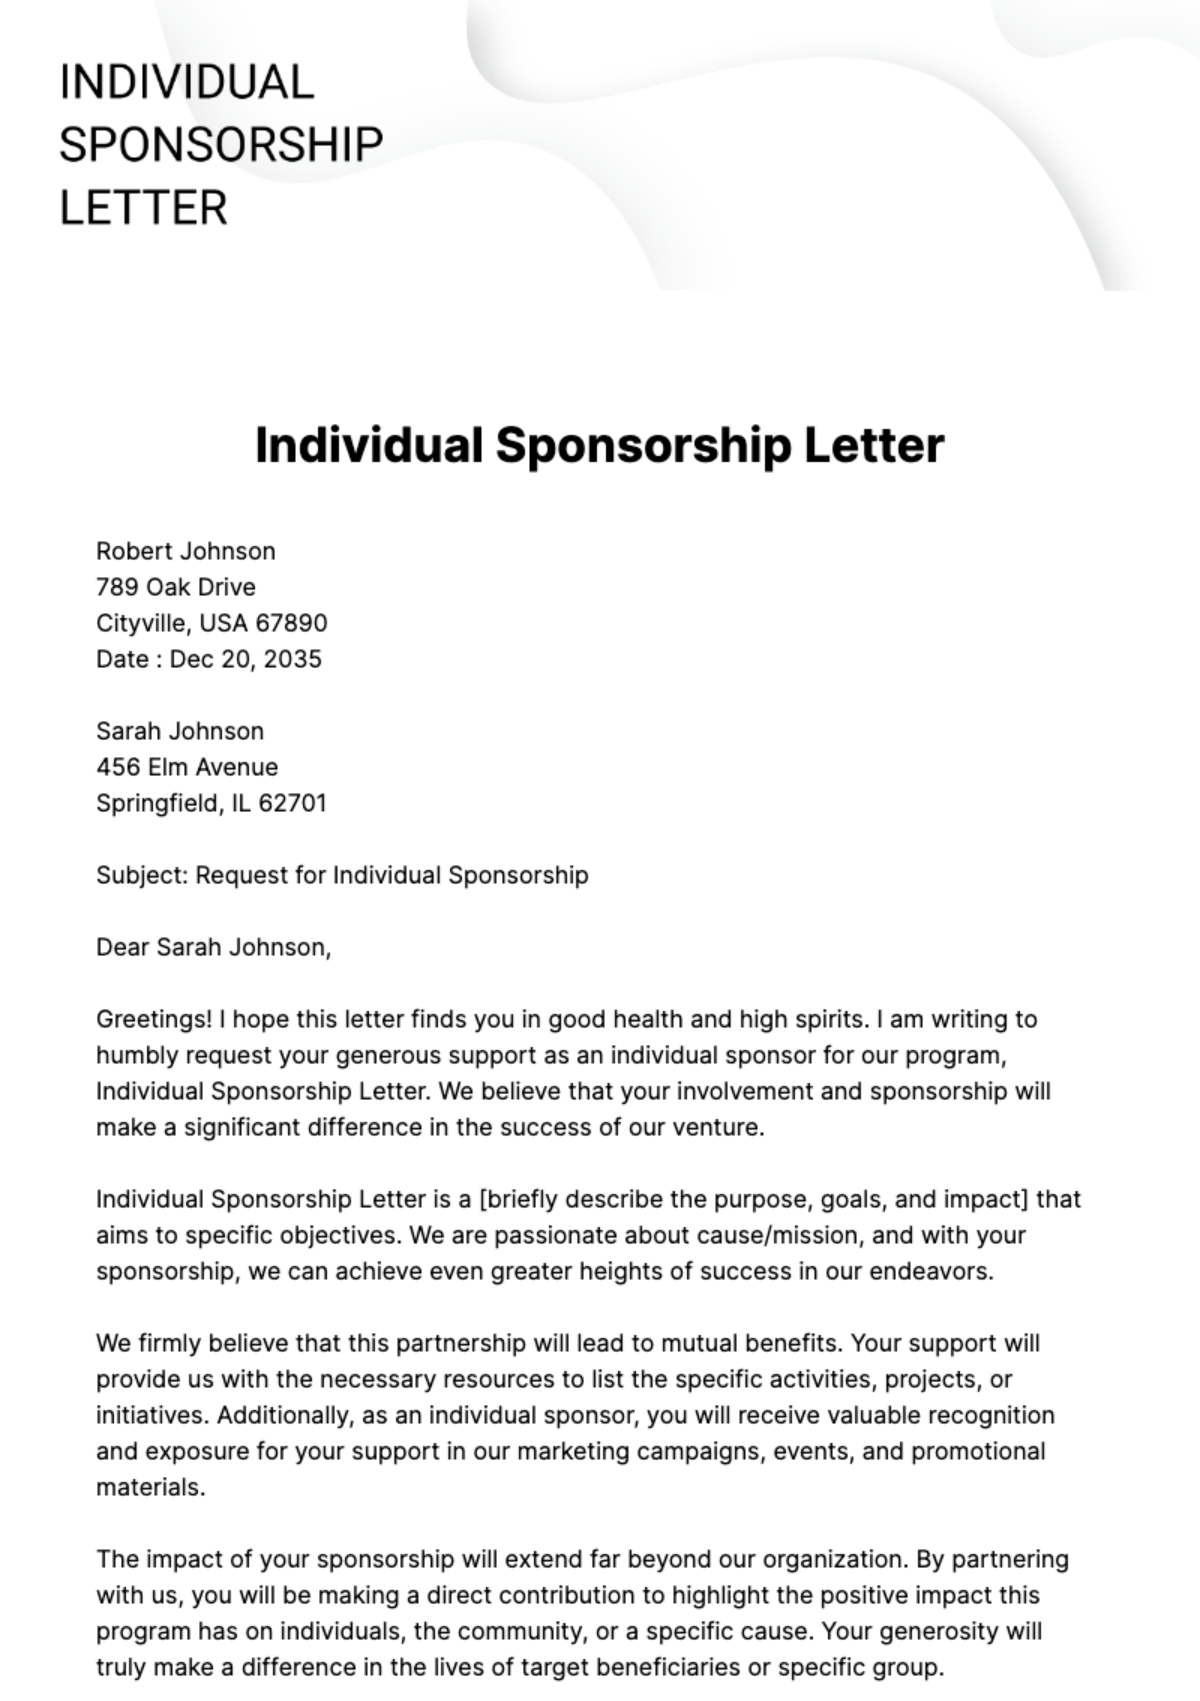 Individual Sponsorship Letter Template